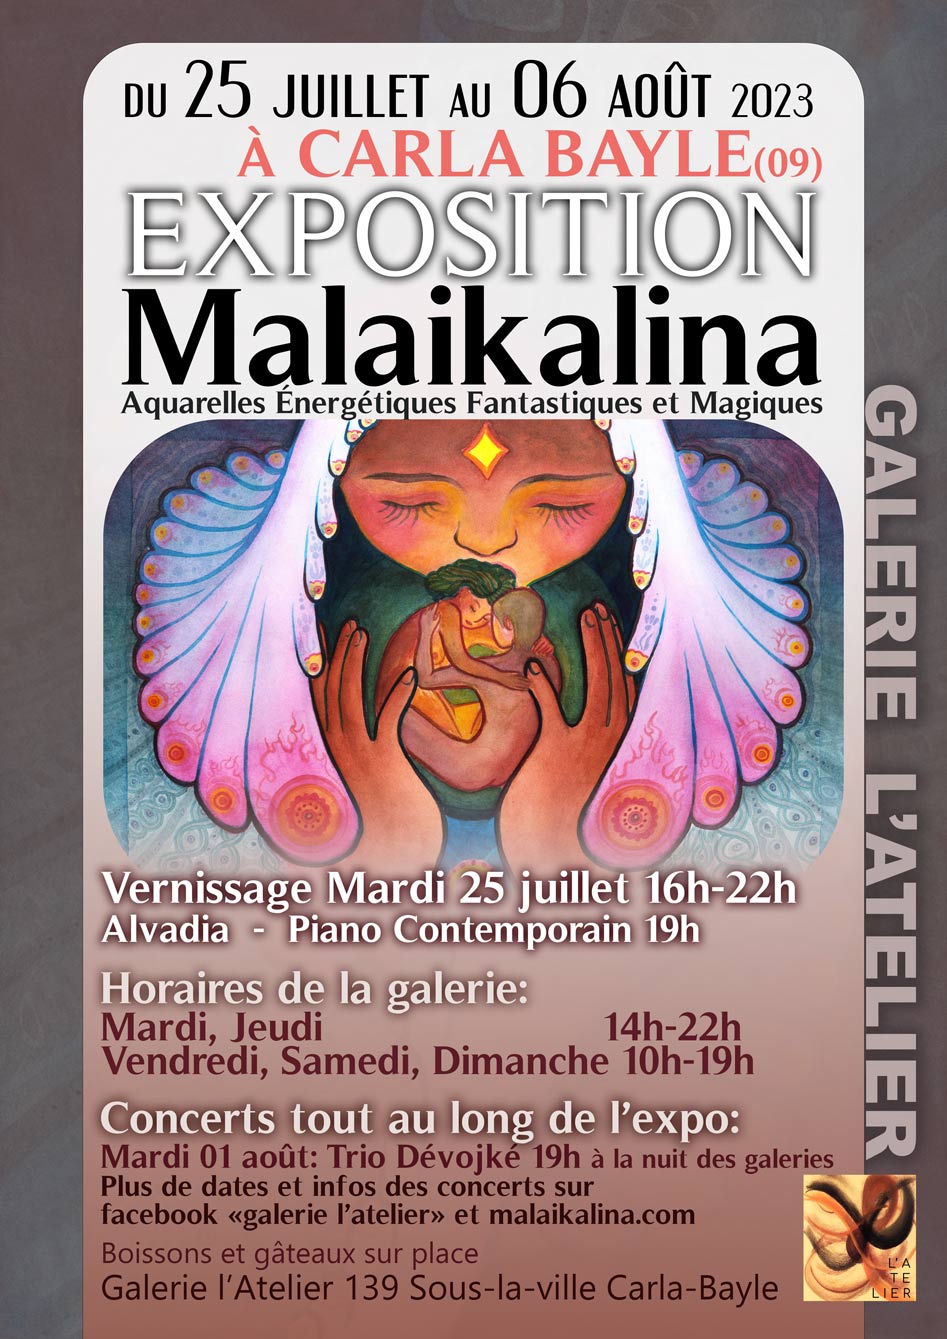 Galerie-latelier-Expo-Malaikalina-2023-WEB.jpg